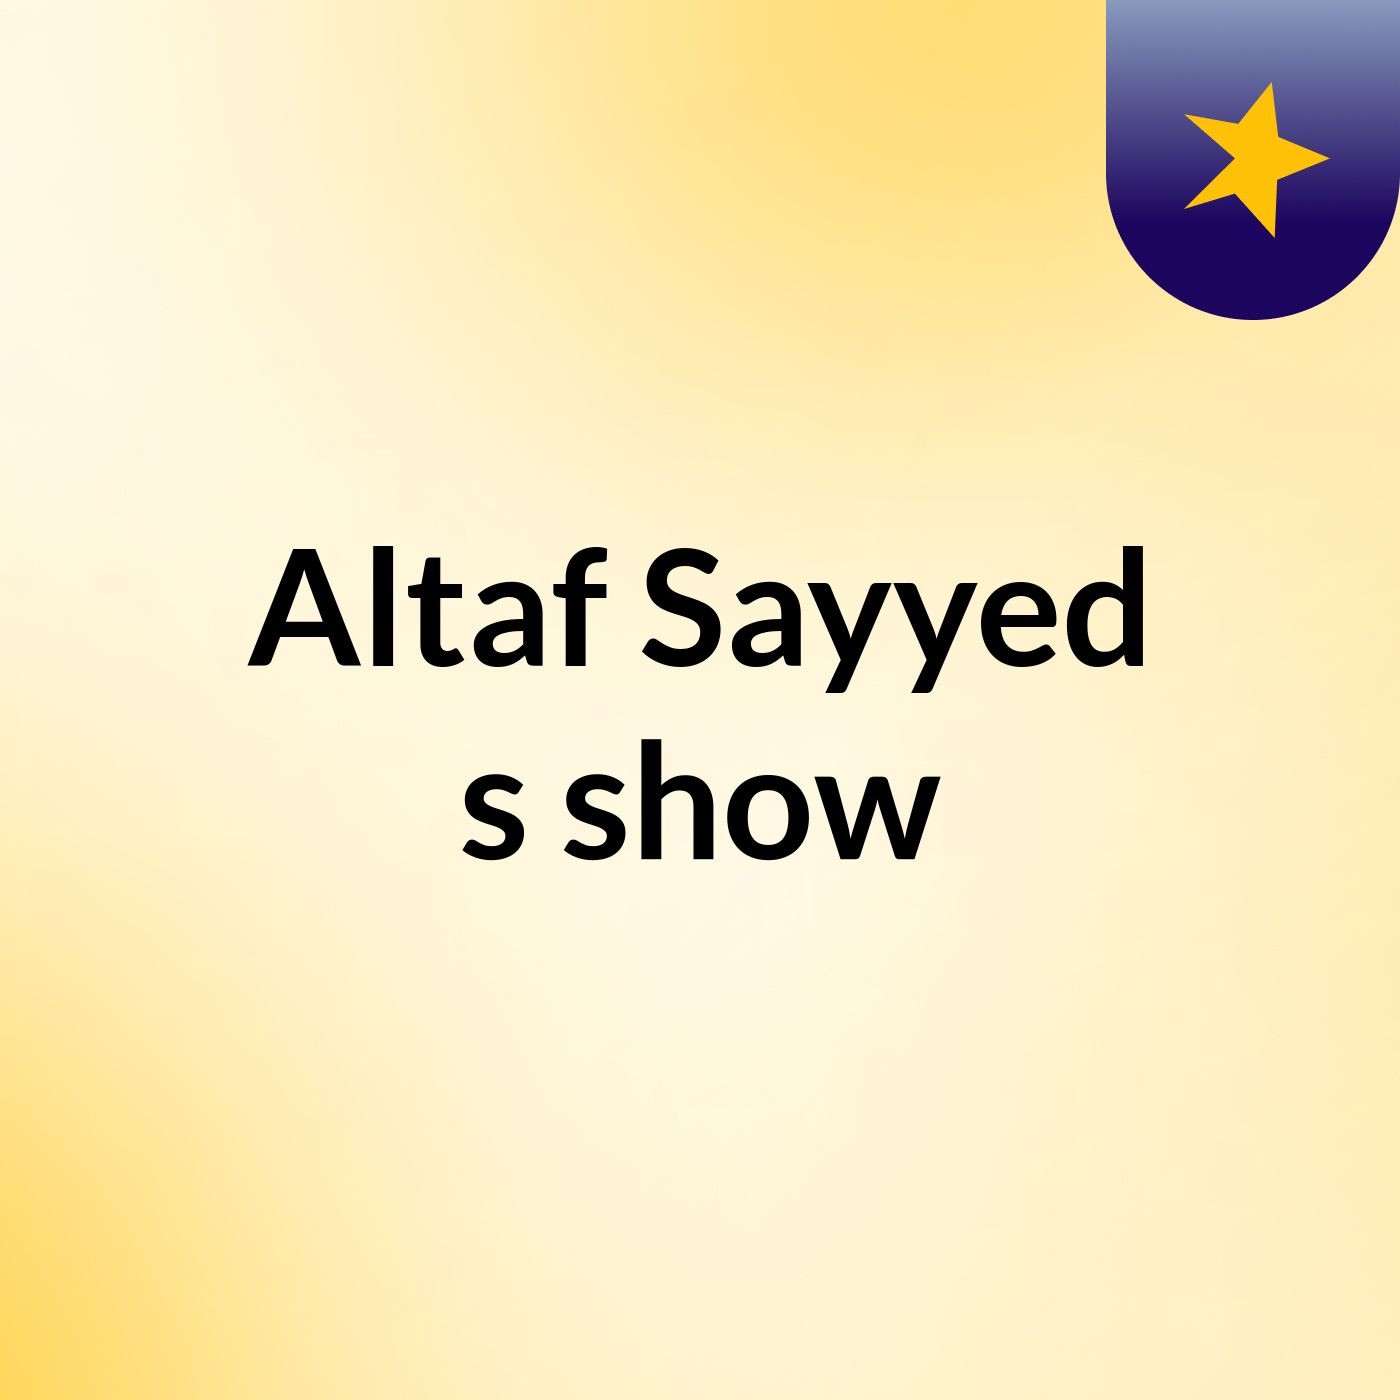 Altaf Sayyed's show